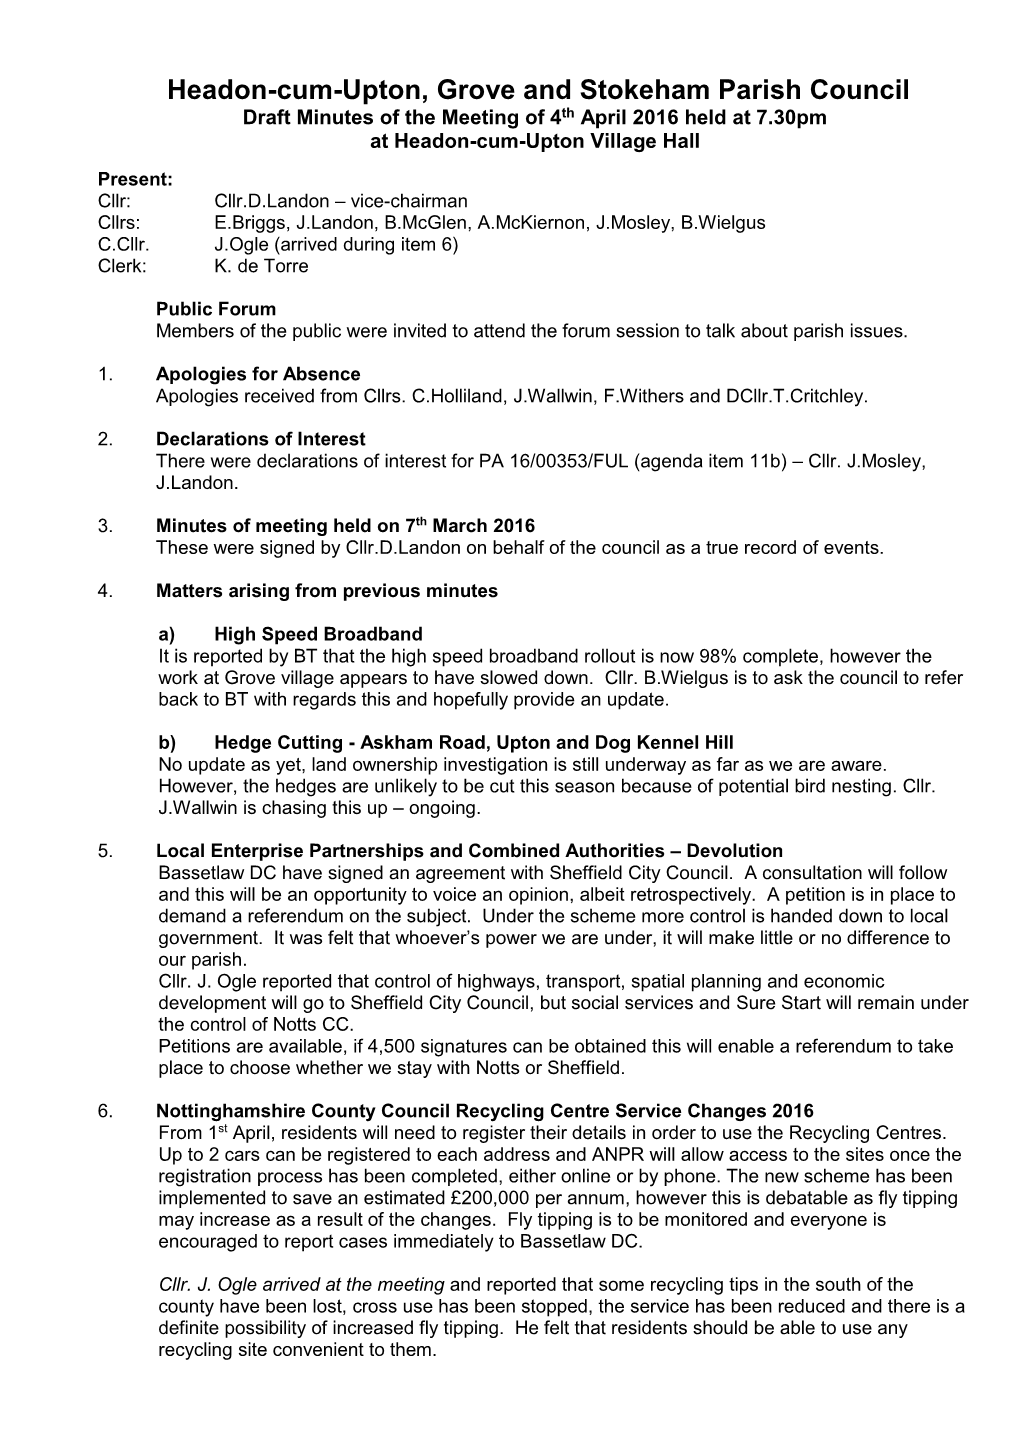 Headon-Cum-Upton, Grove and Stokeham Parish Council Draft Minutes of the Meeting of 4Th April 2016 Held at 7.30Pm at Headon-Cum-Upton Village Hall